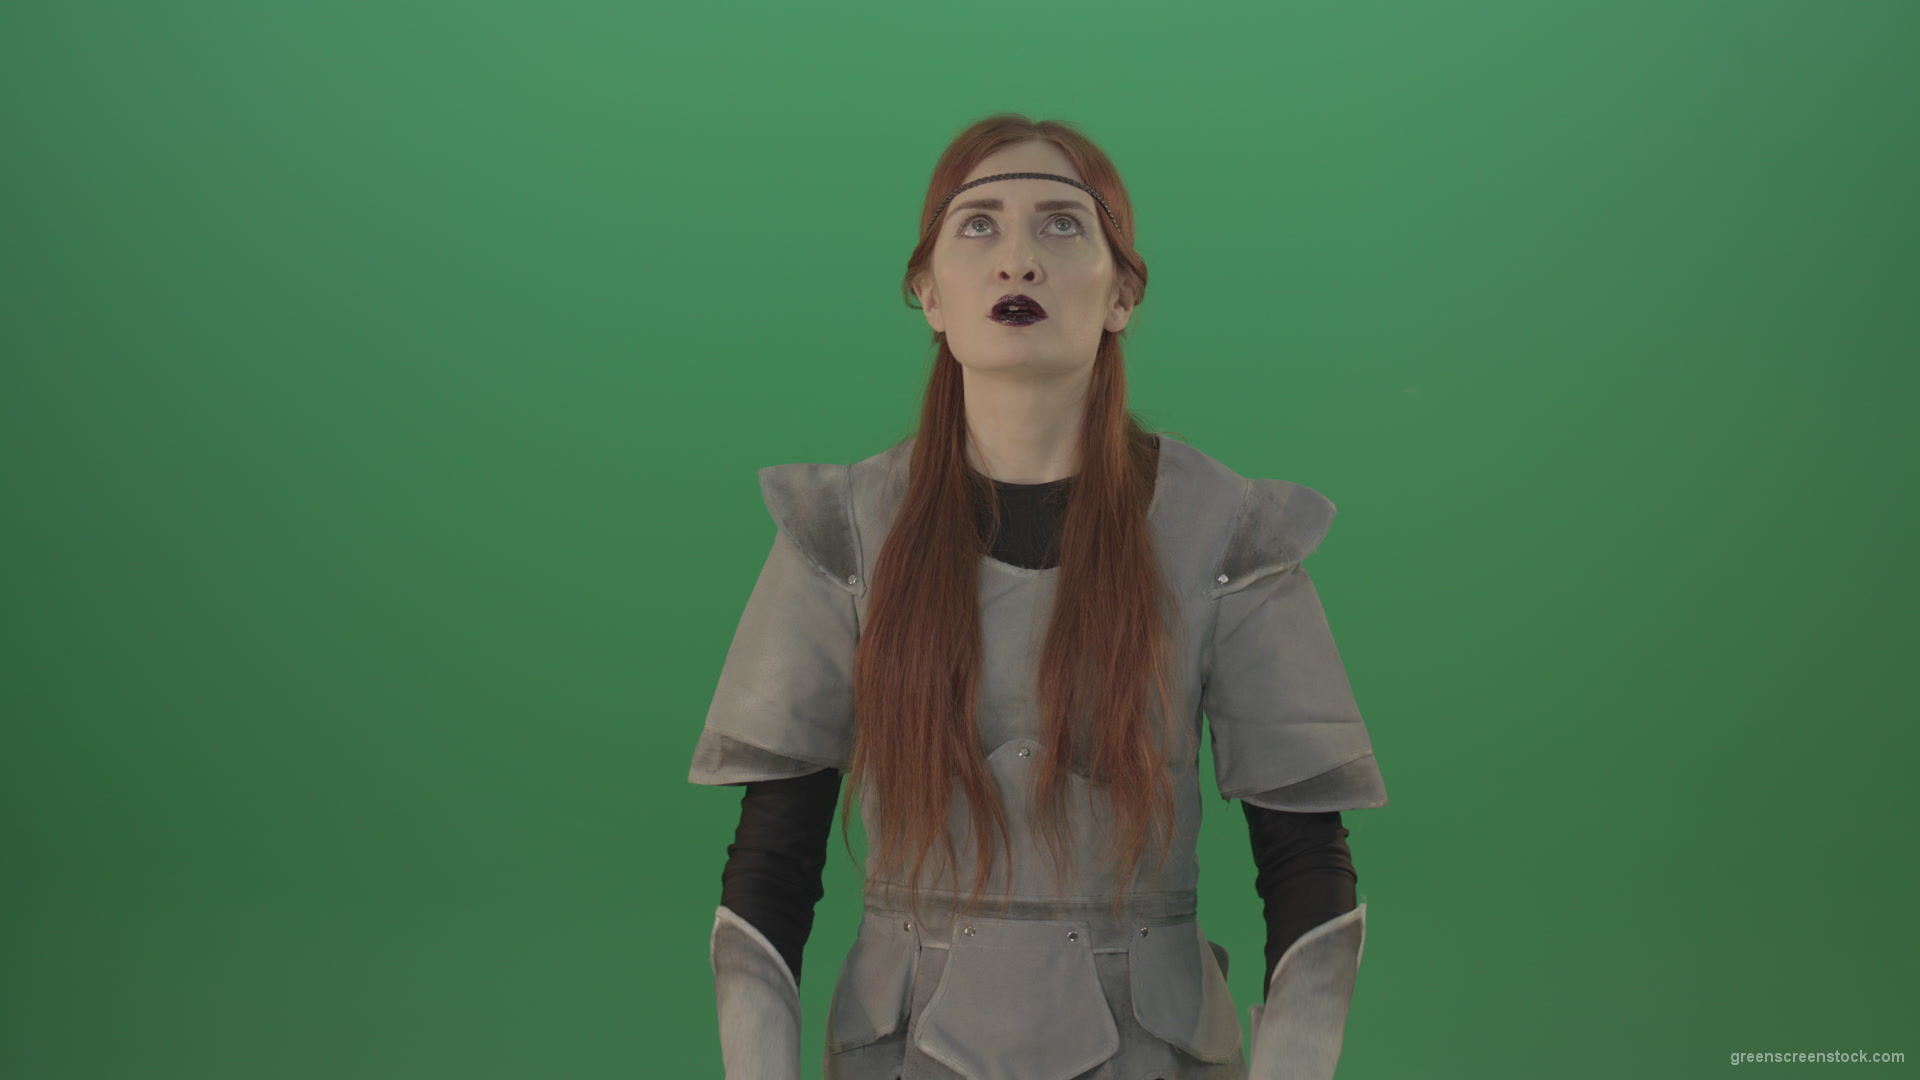 Red-hair-girl-praying-god-in-medieval-warrior-costume-in-green-screen-studio_002 Green Screen Stock